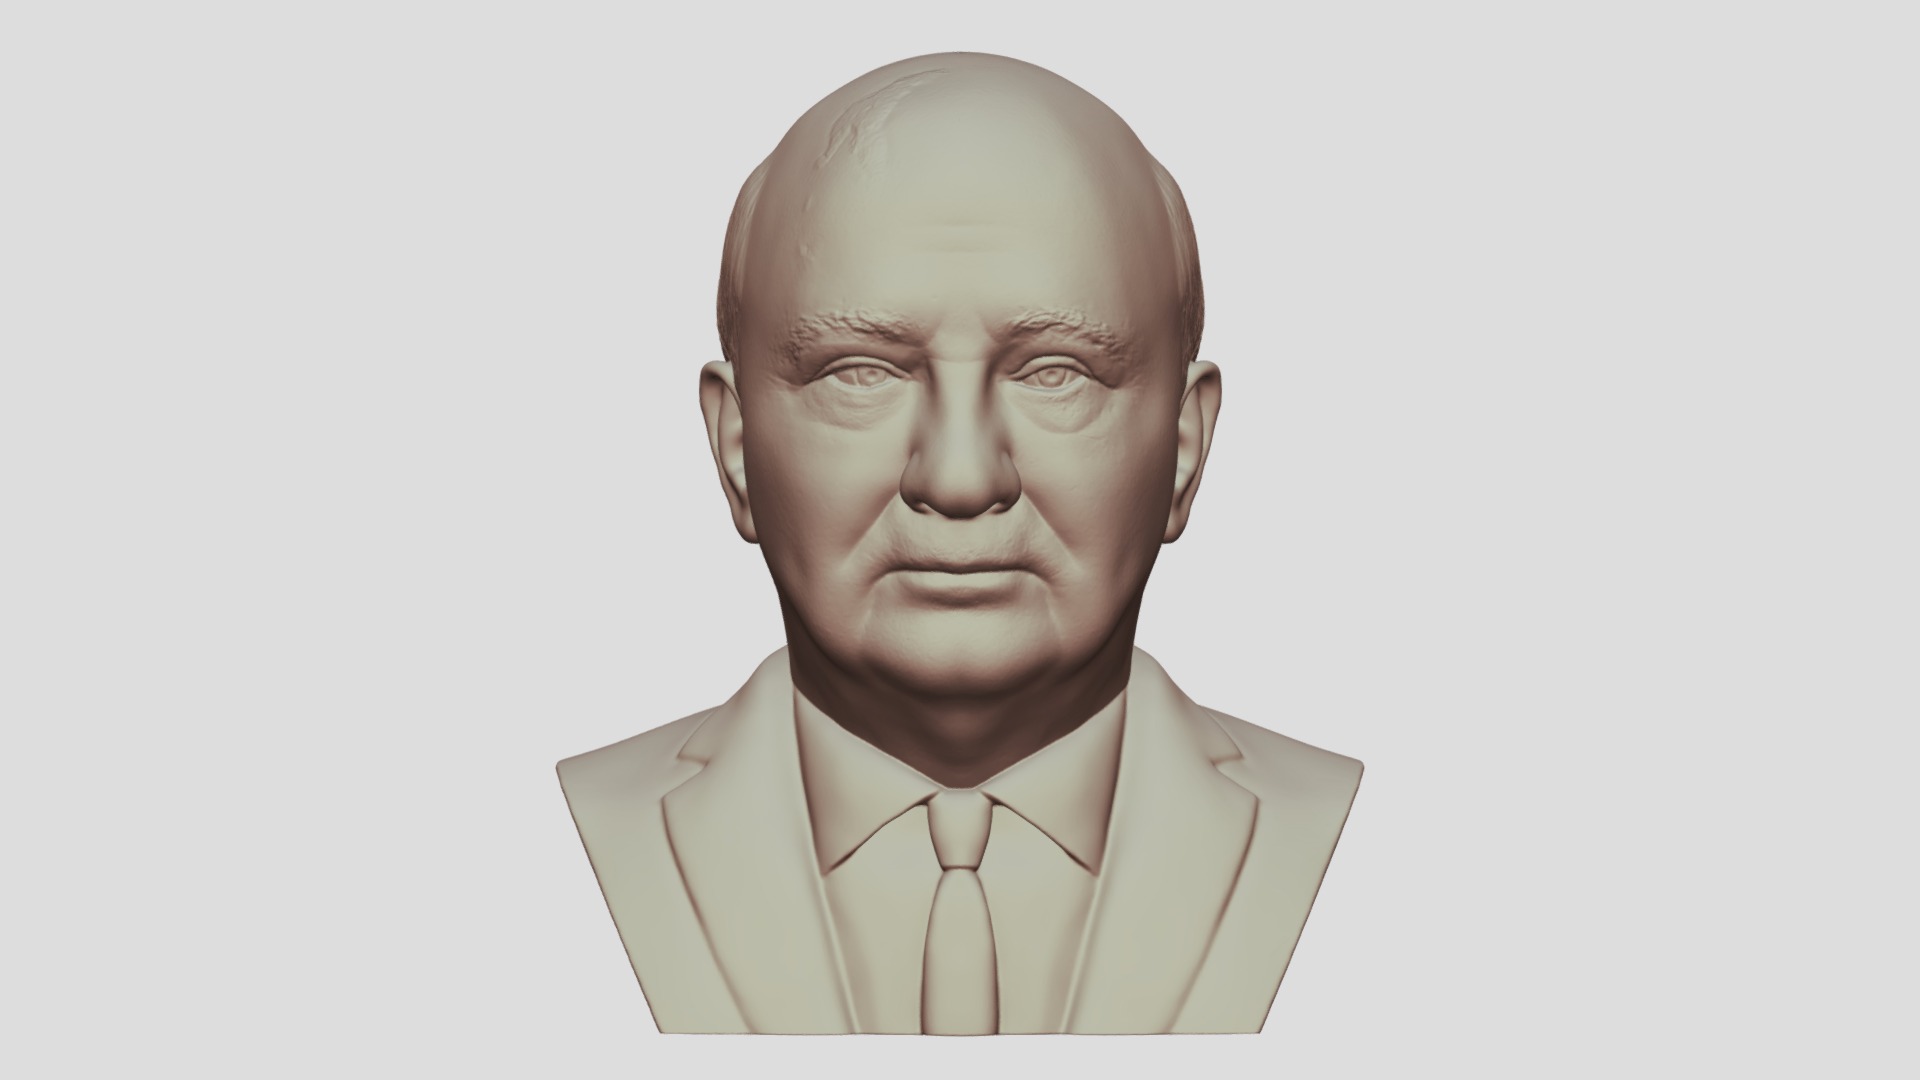 3D model Mikhail Gorbachev bust for 3D printing - This is a 3D model of the Mikhail Gorbachev bust for 3D printing. The 3D model is about a man with a bald head.